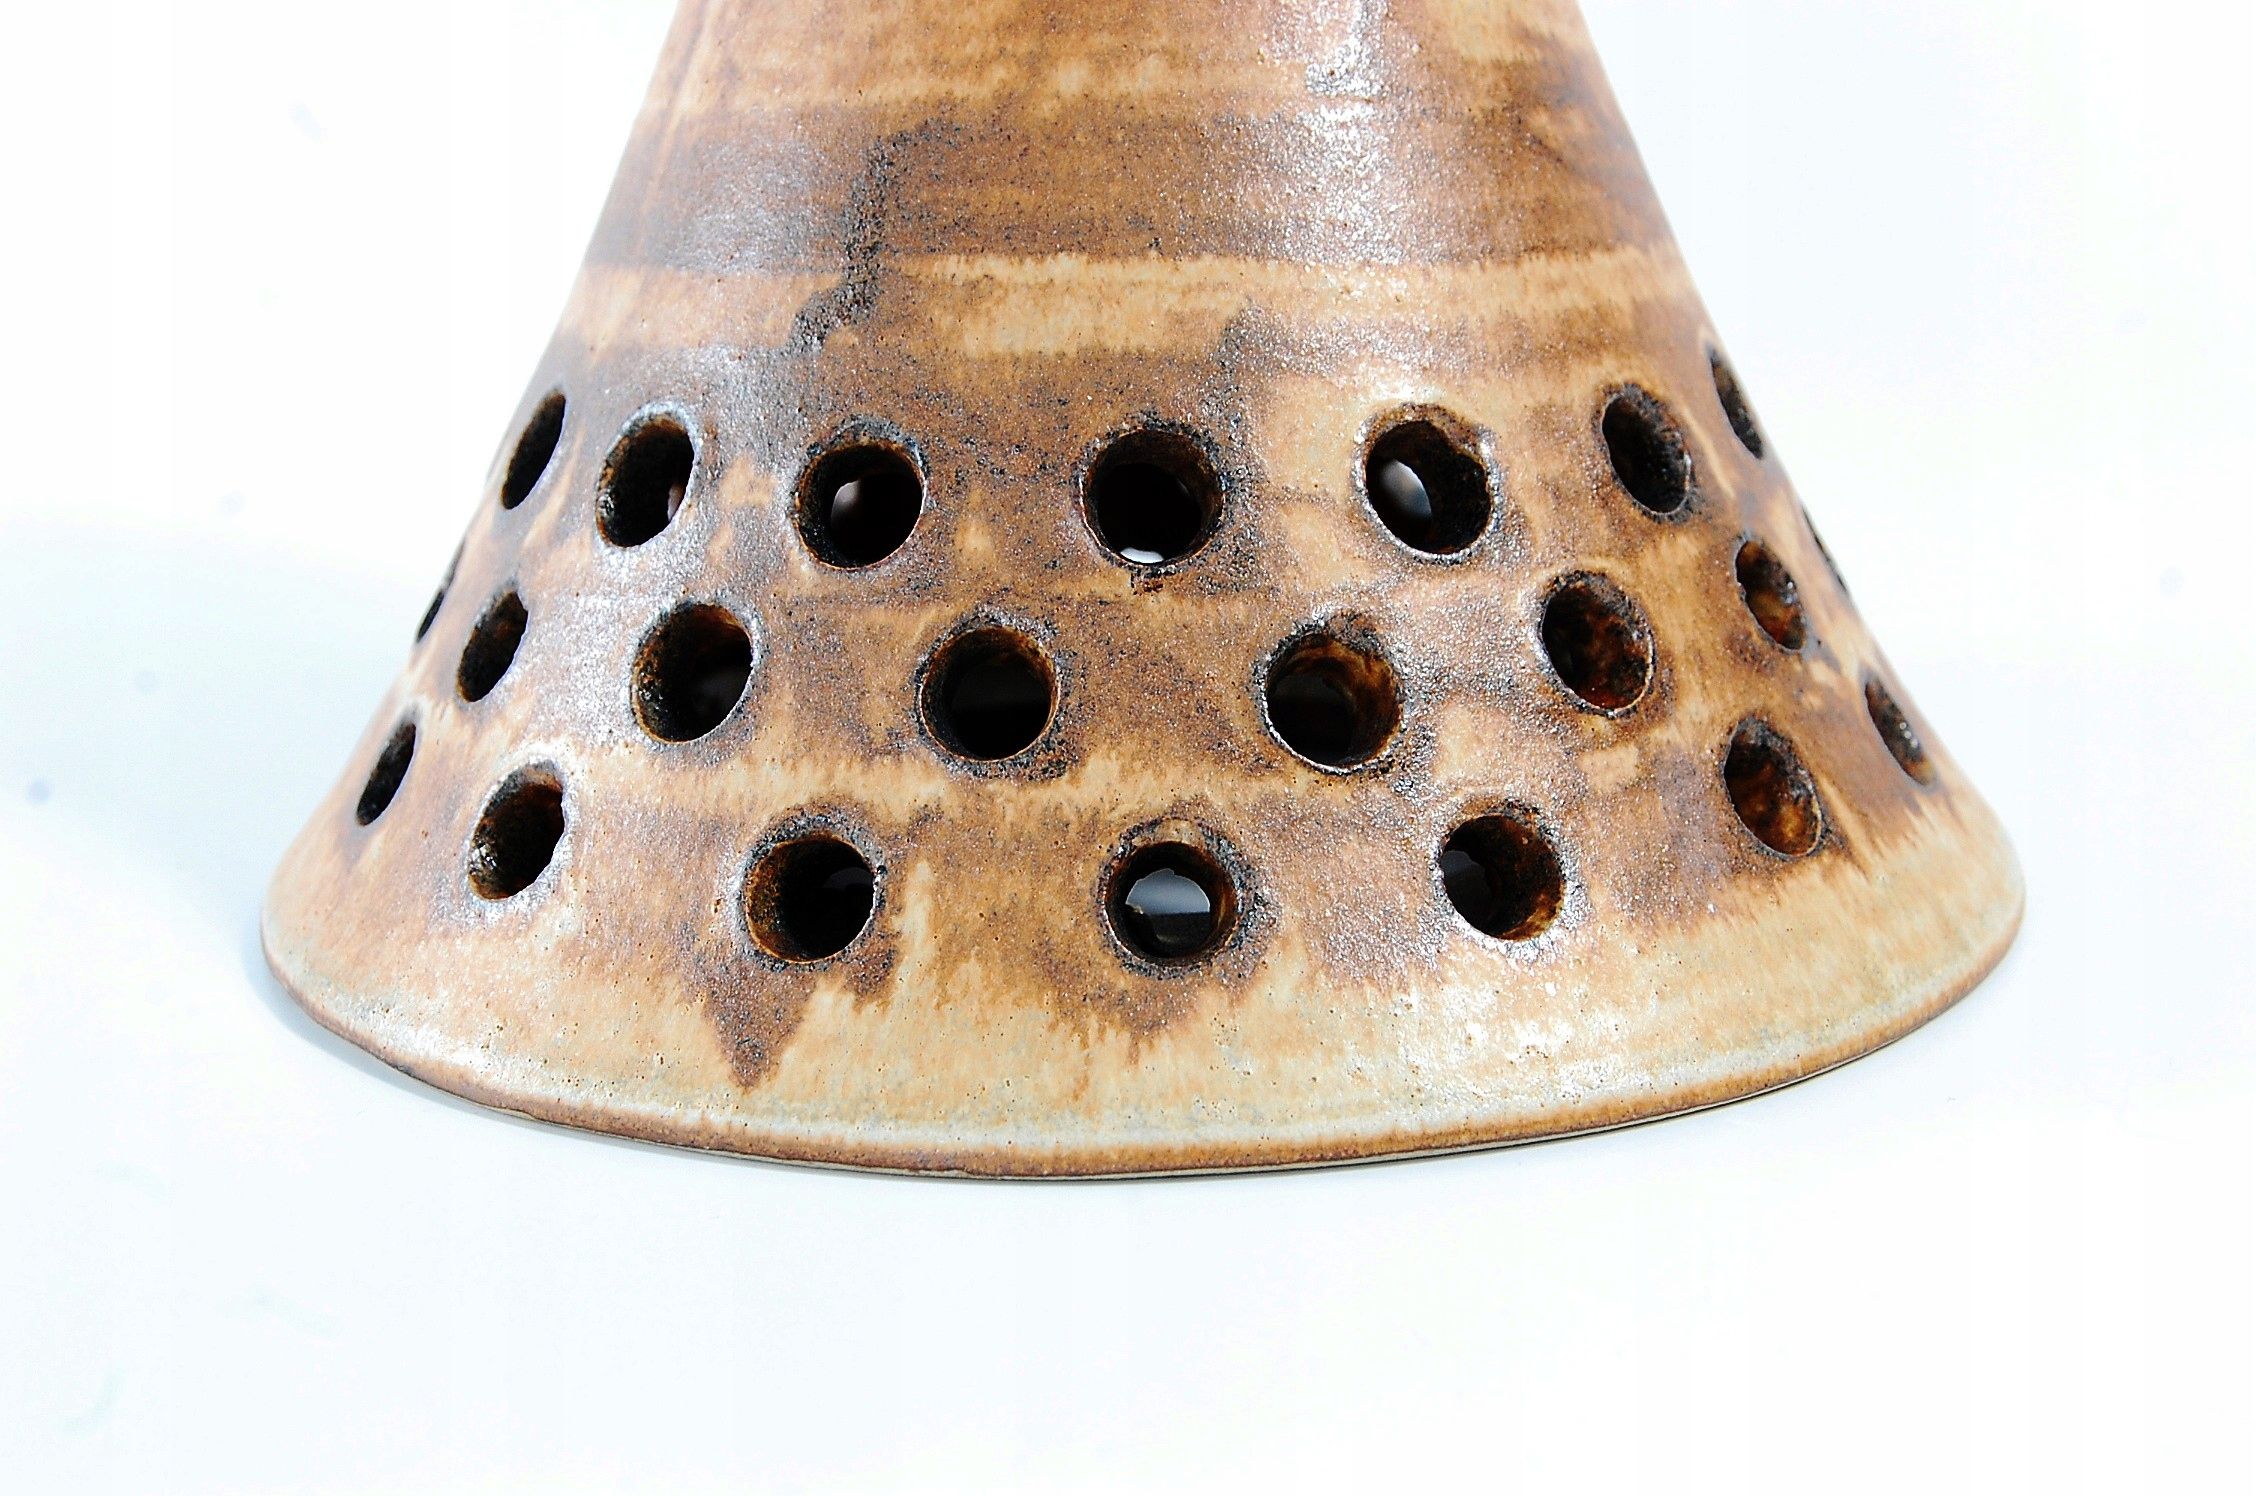 skandynawski design ceramiczna lampa klosz